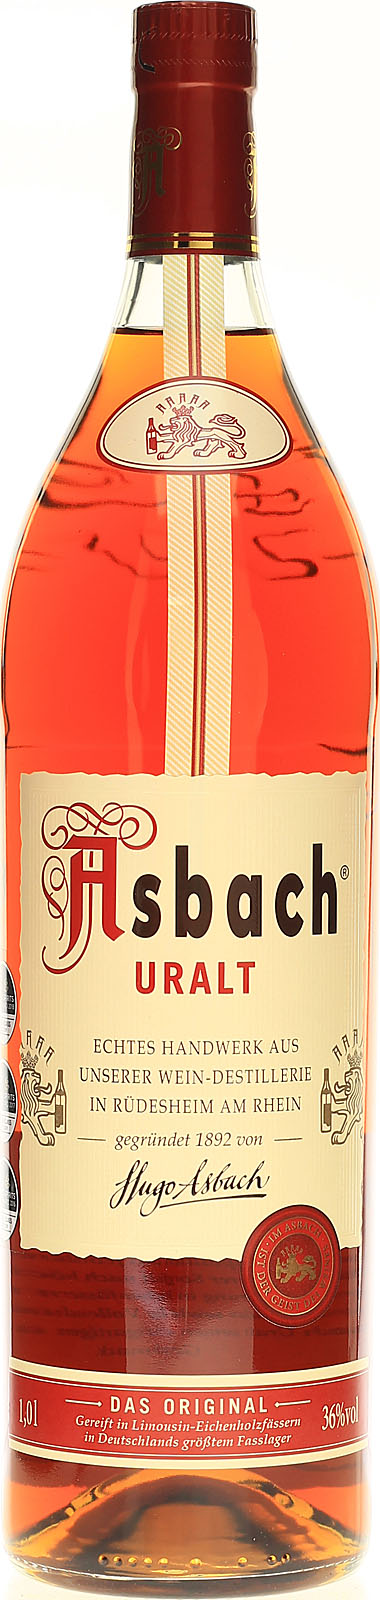 Asbach Uralt, deutscher Weinbrand